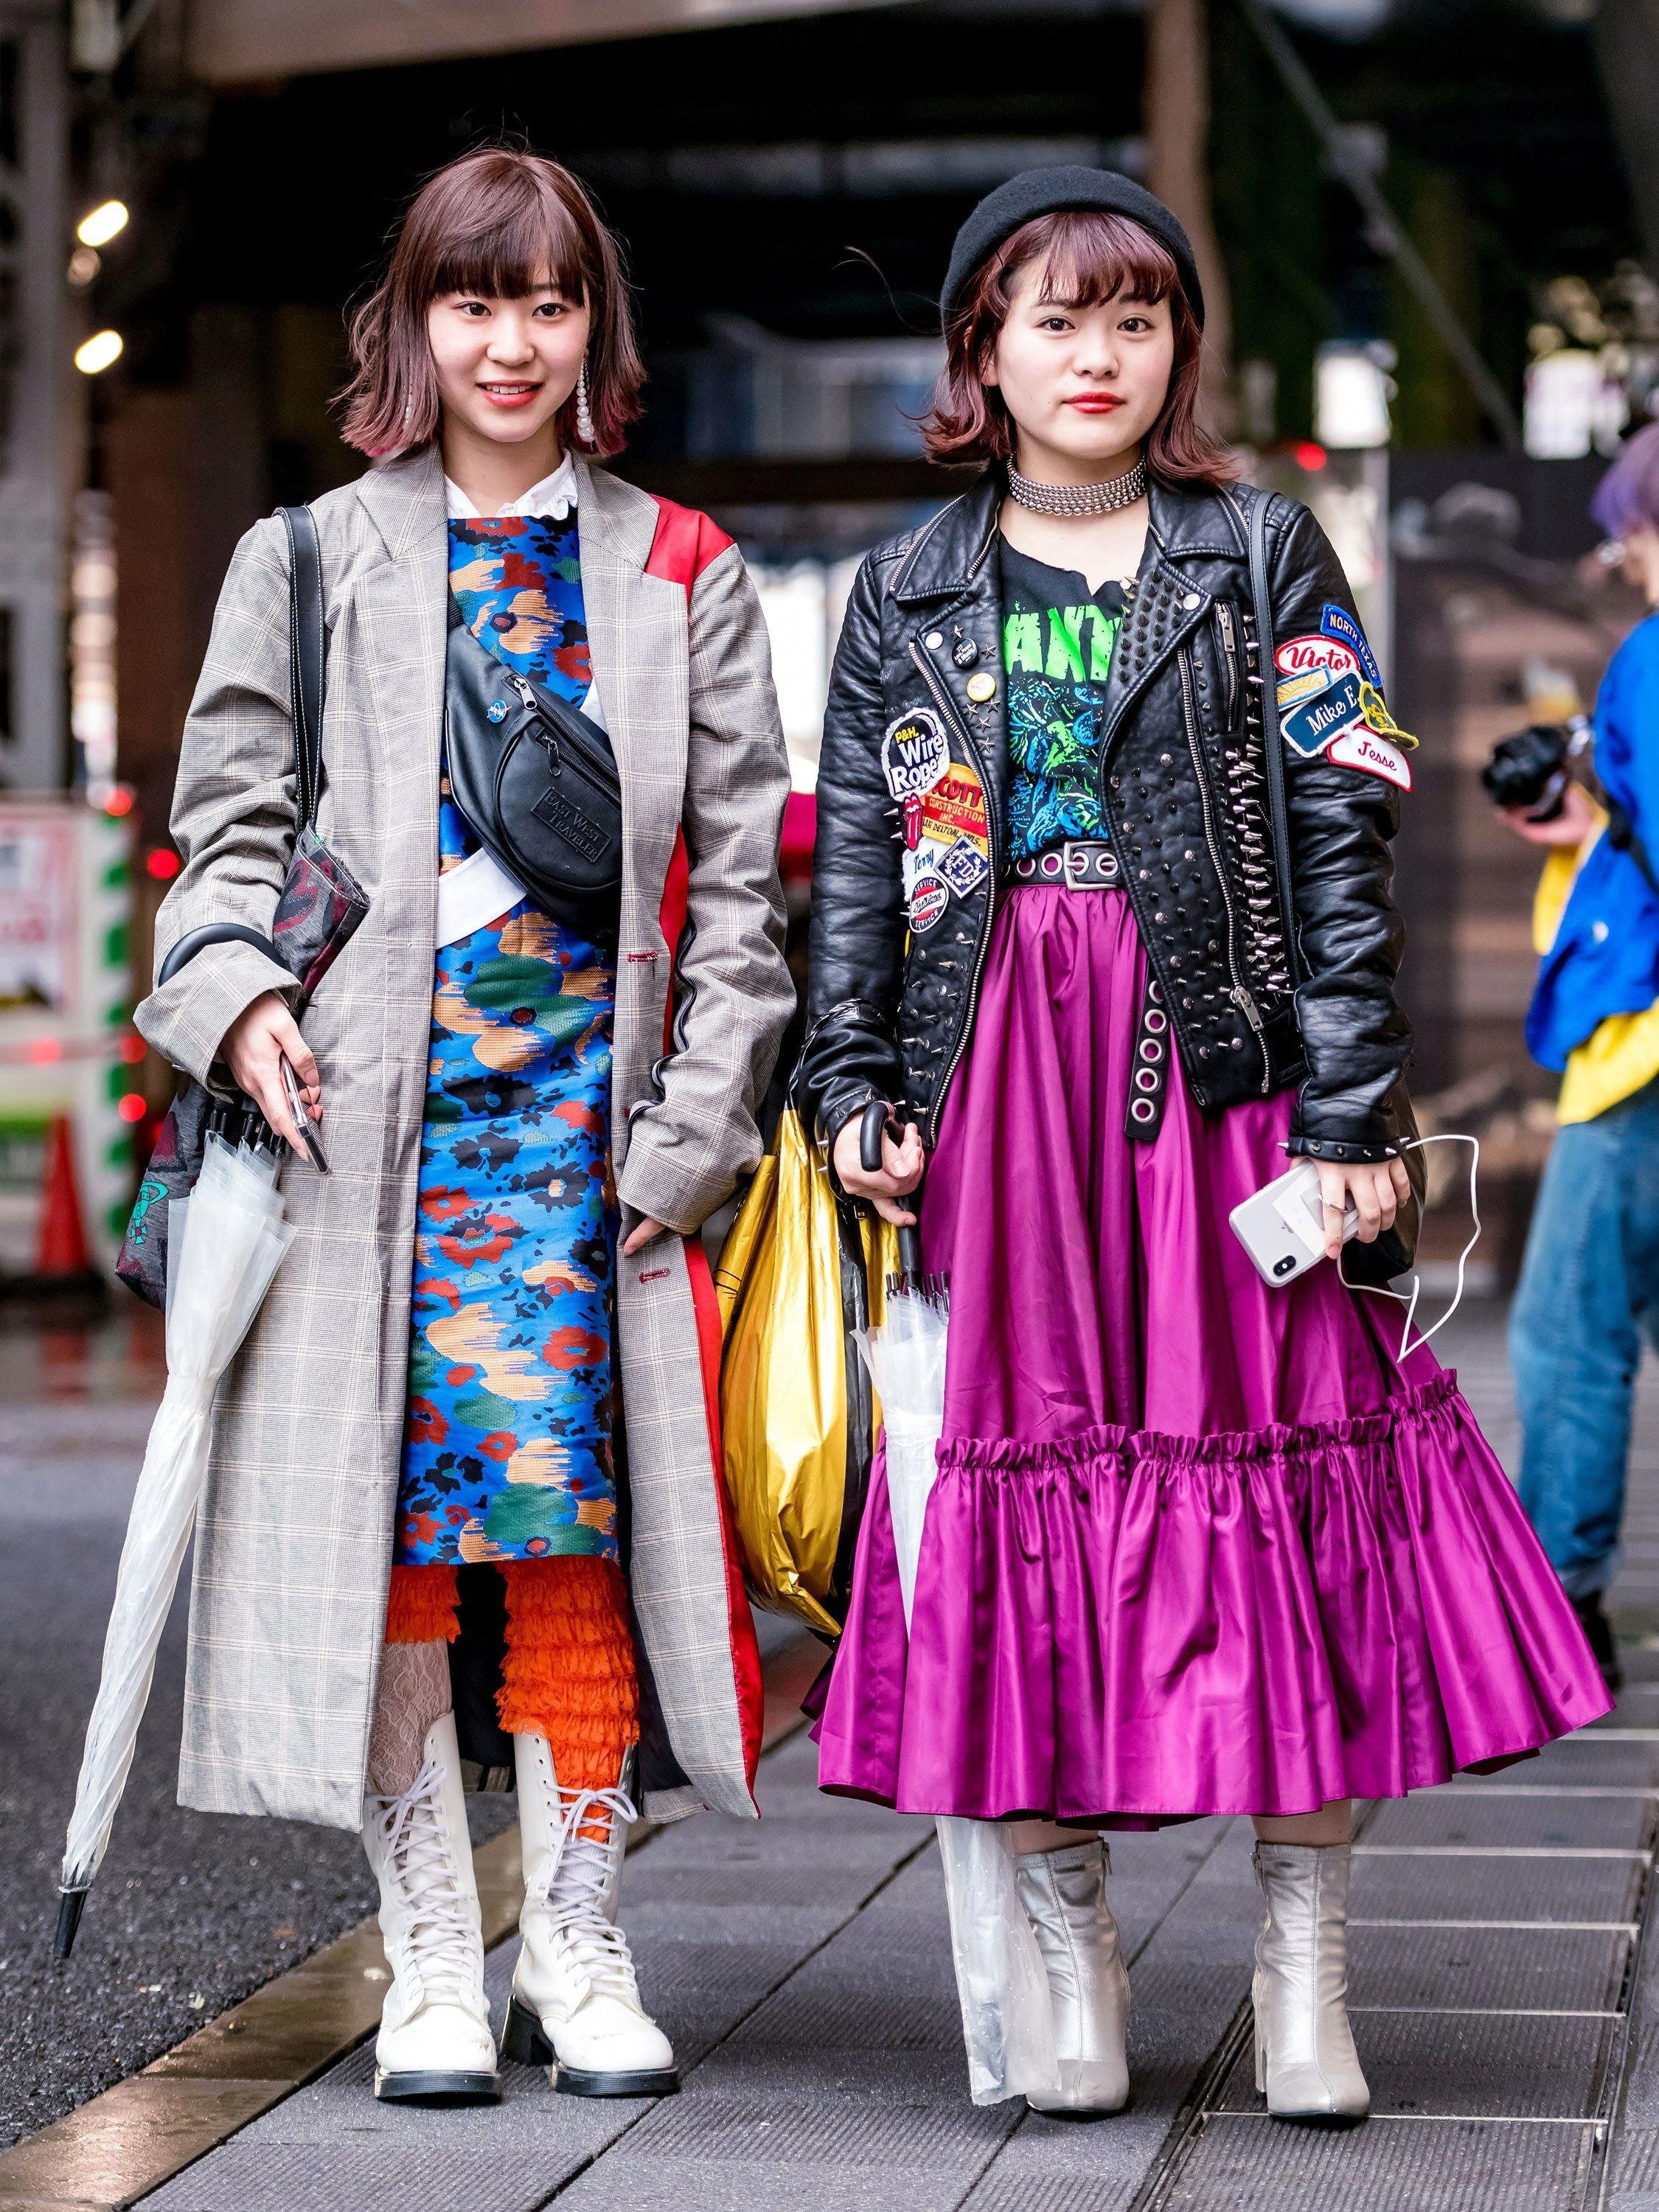 Токийские одежда. Харадзюку Токио. Уличная мода Азия Харадзюку. Токио стрит фэшн. Японский уличный стиль Харадзюку.